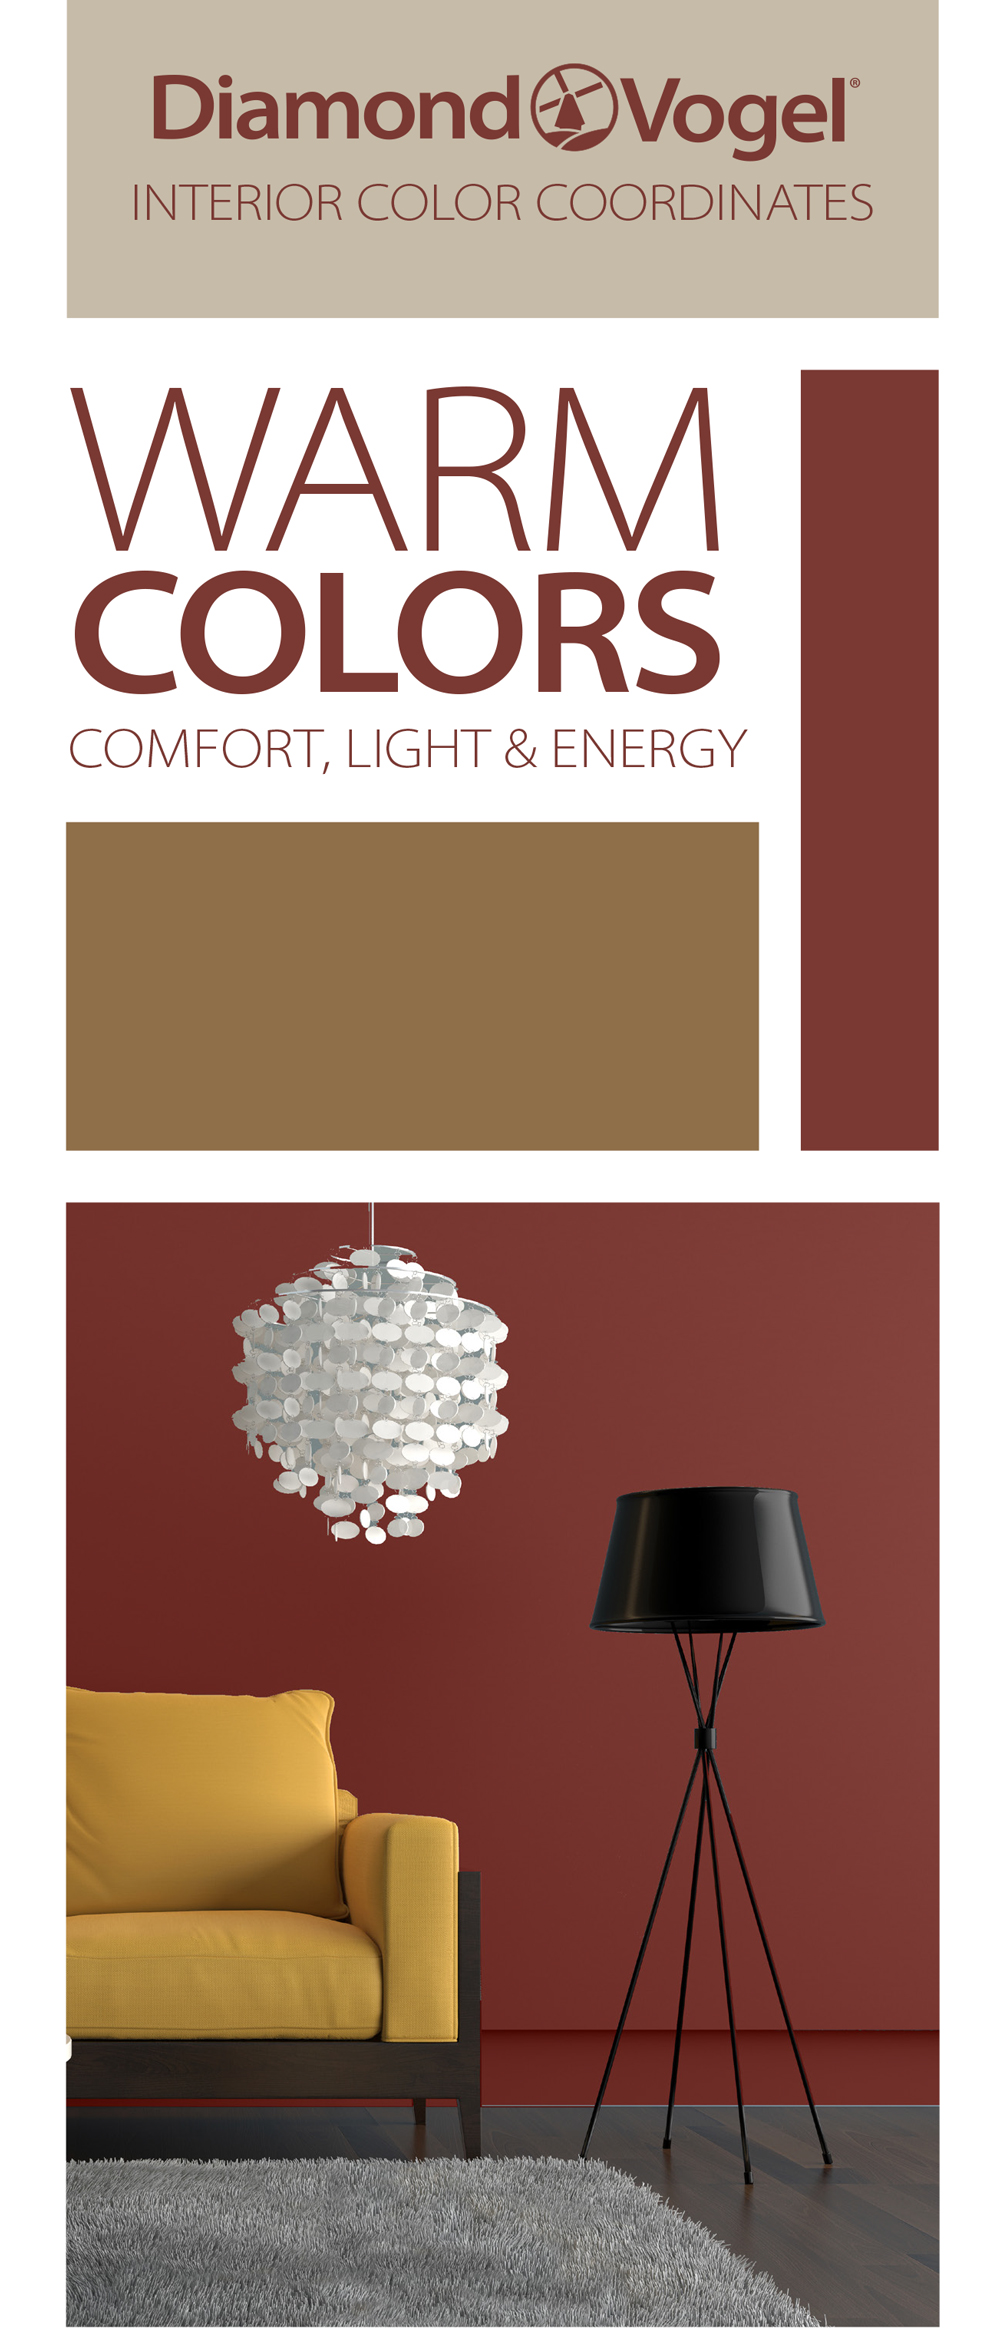 Warm Colors: Comfort, Light, & Energy